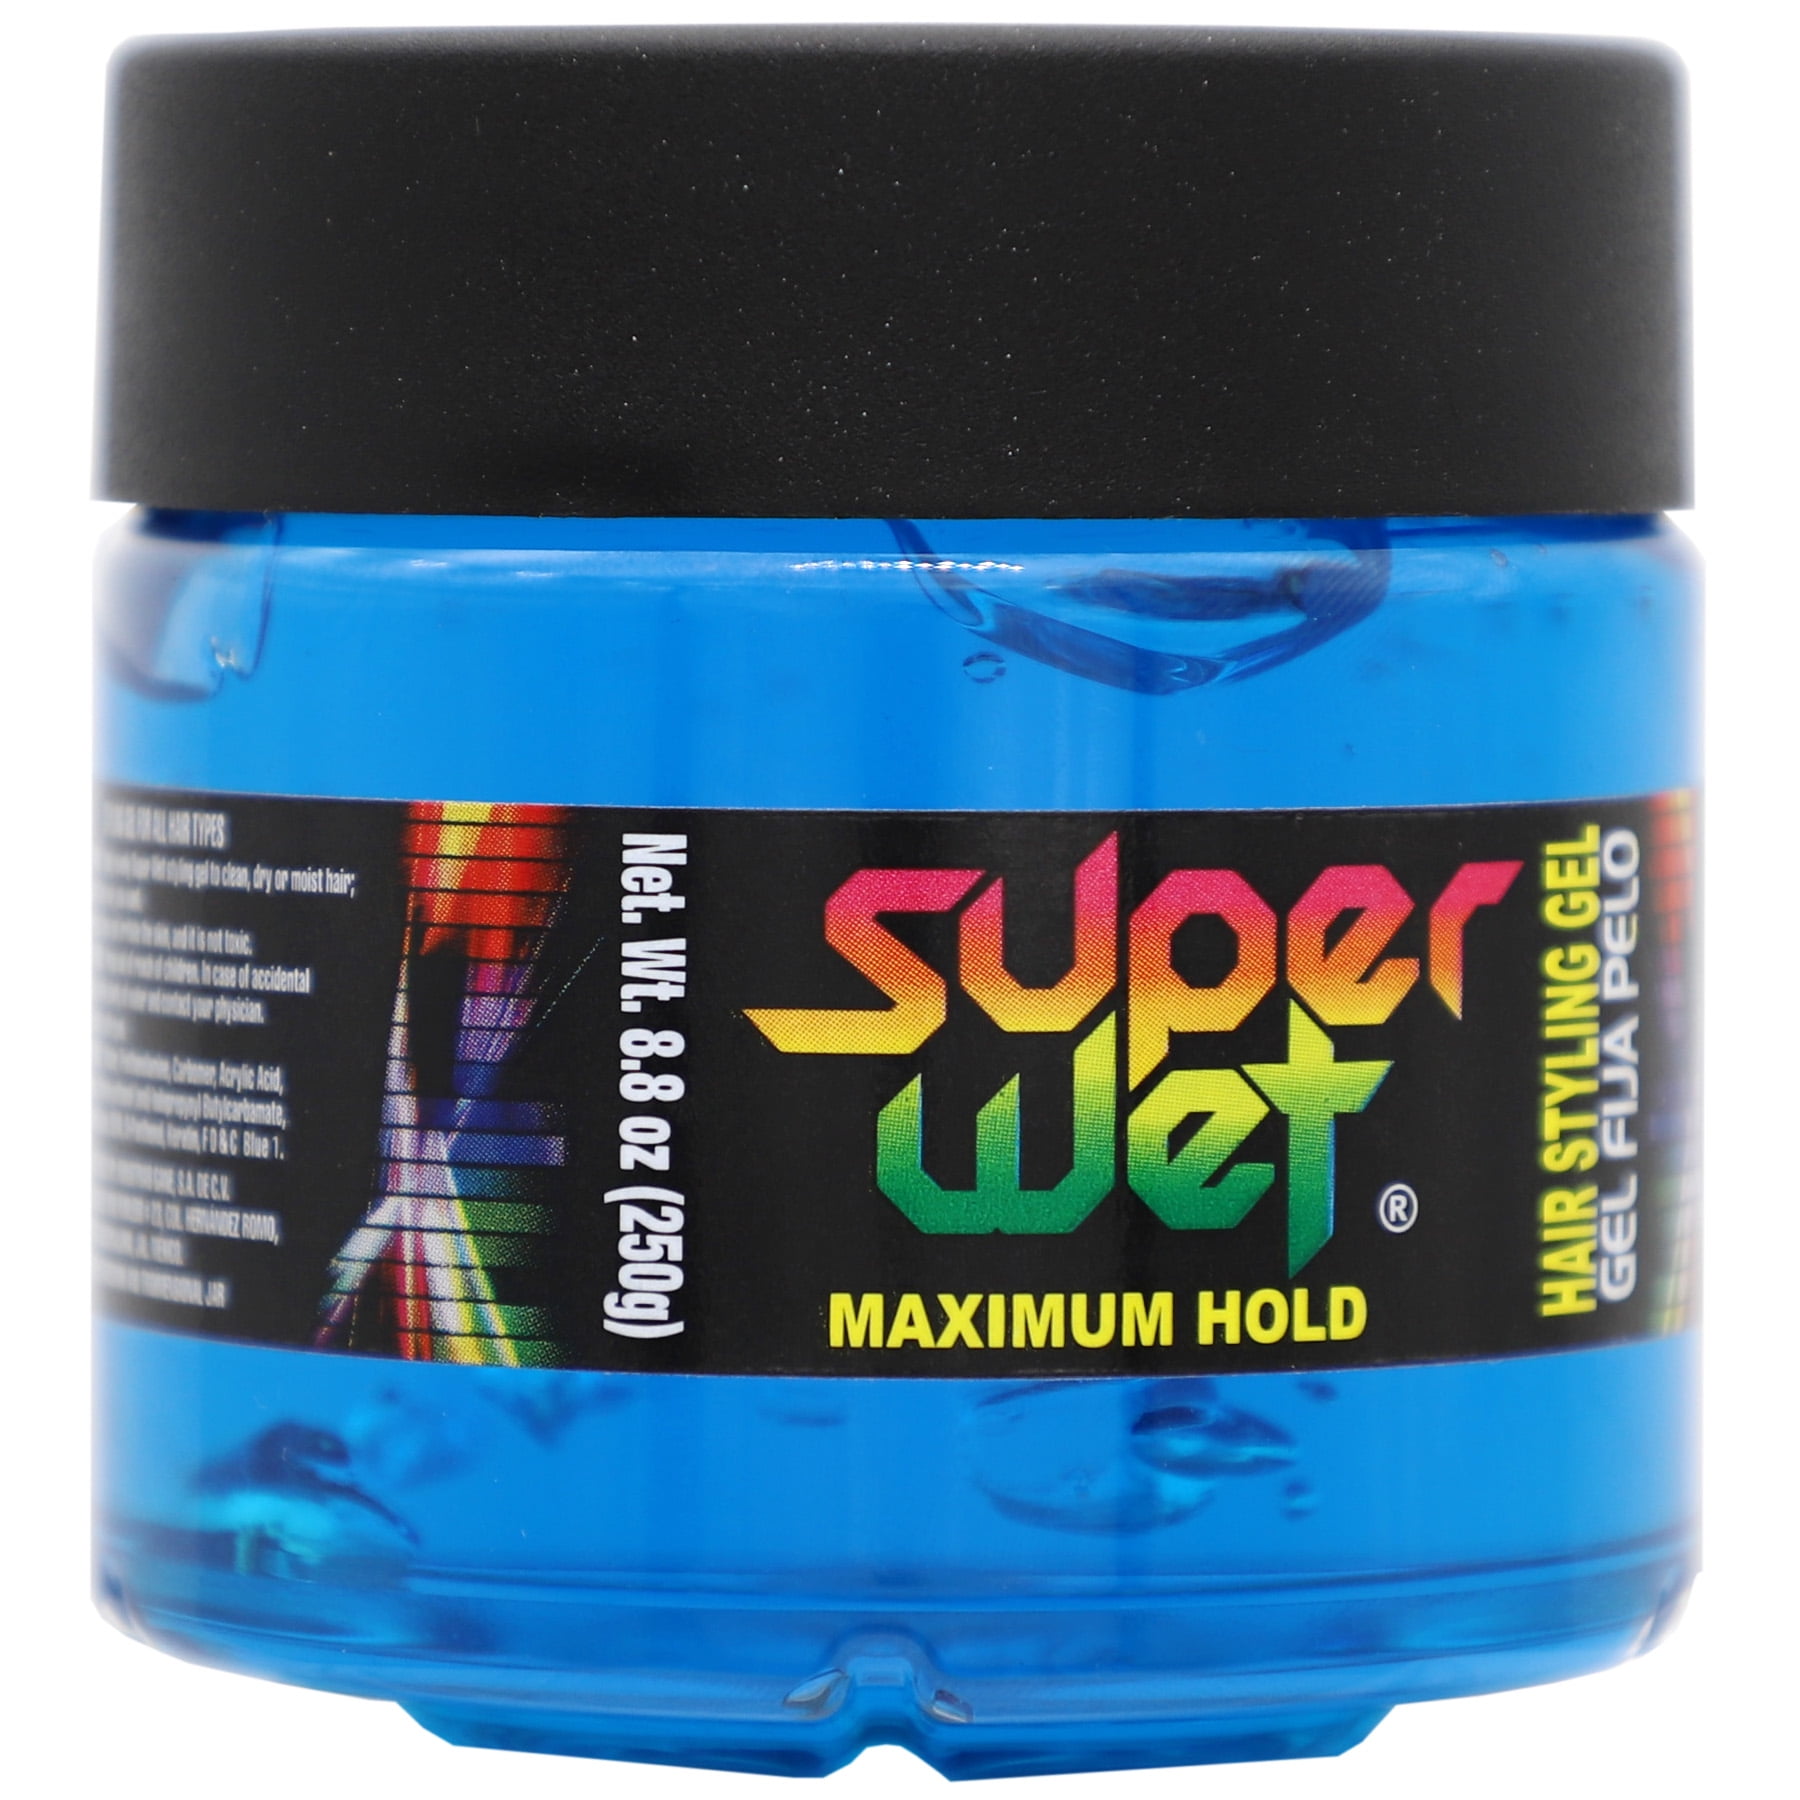 Super Wet Azul Nourishing Hair Styling Gel, Maximum Control